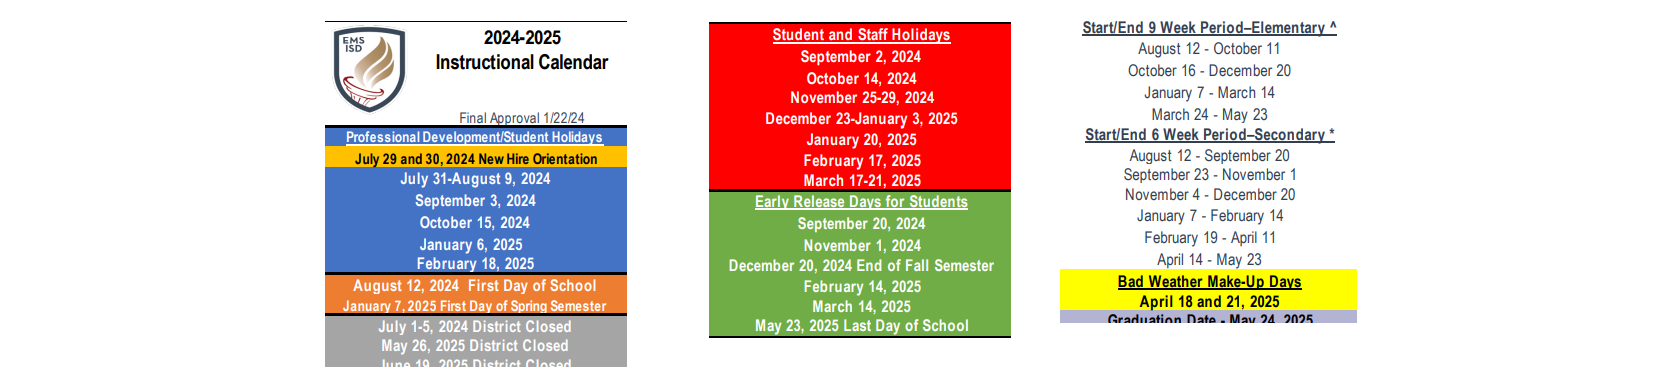 District School Academic Calendar Key for Remington Point Elementary